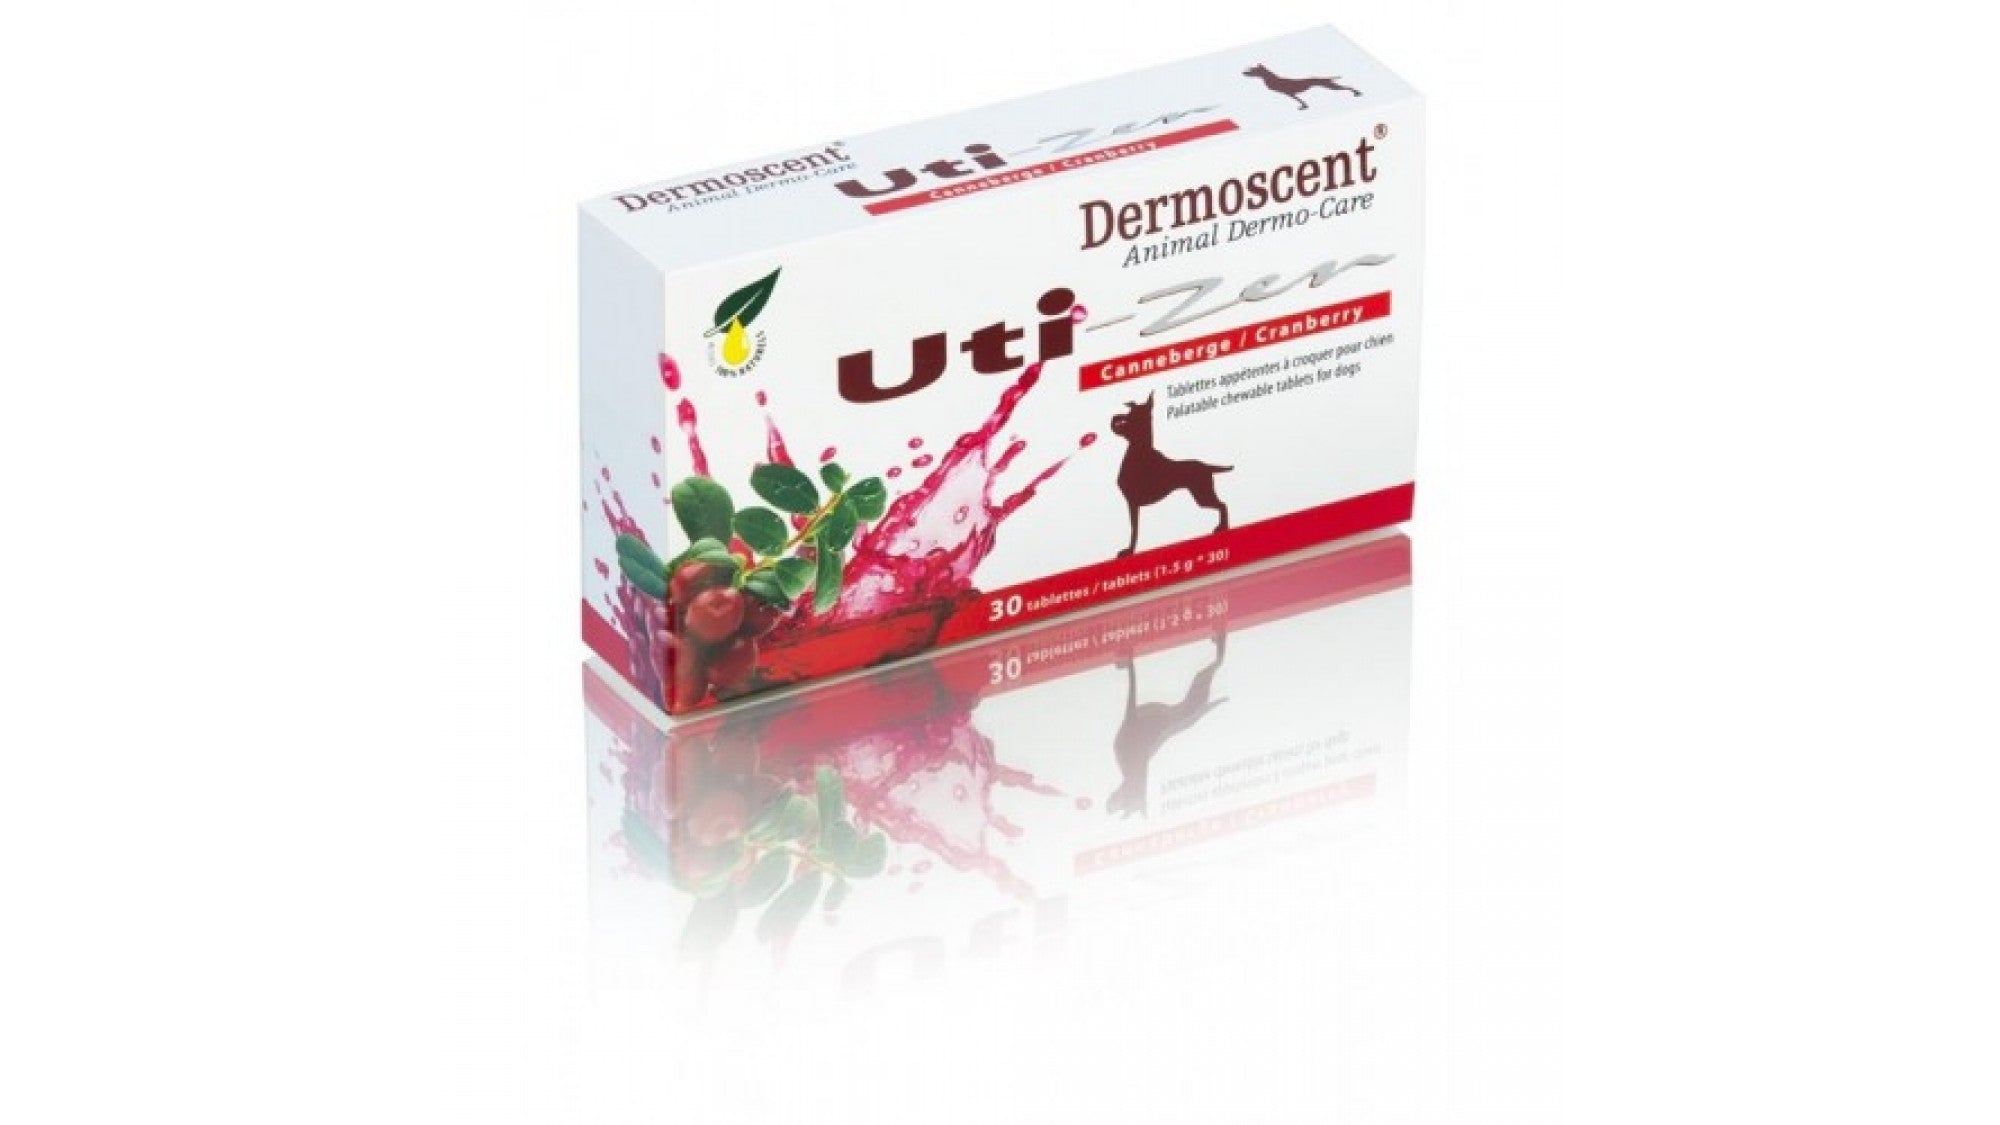 Dermoscent Uti-Zen 30 comprimate - ALTVET - Farmacie veterinara - Pet Shop - Cosmetica